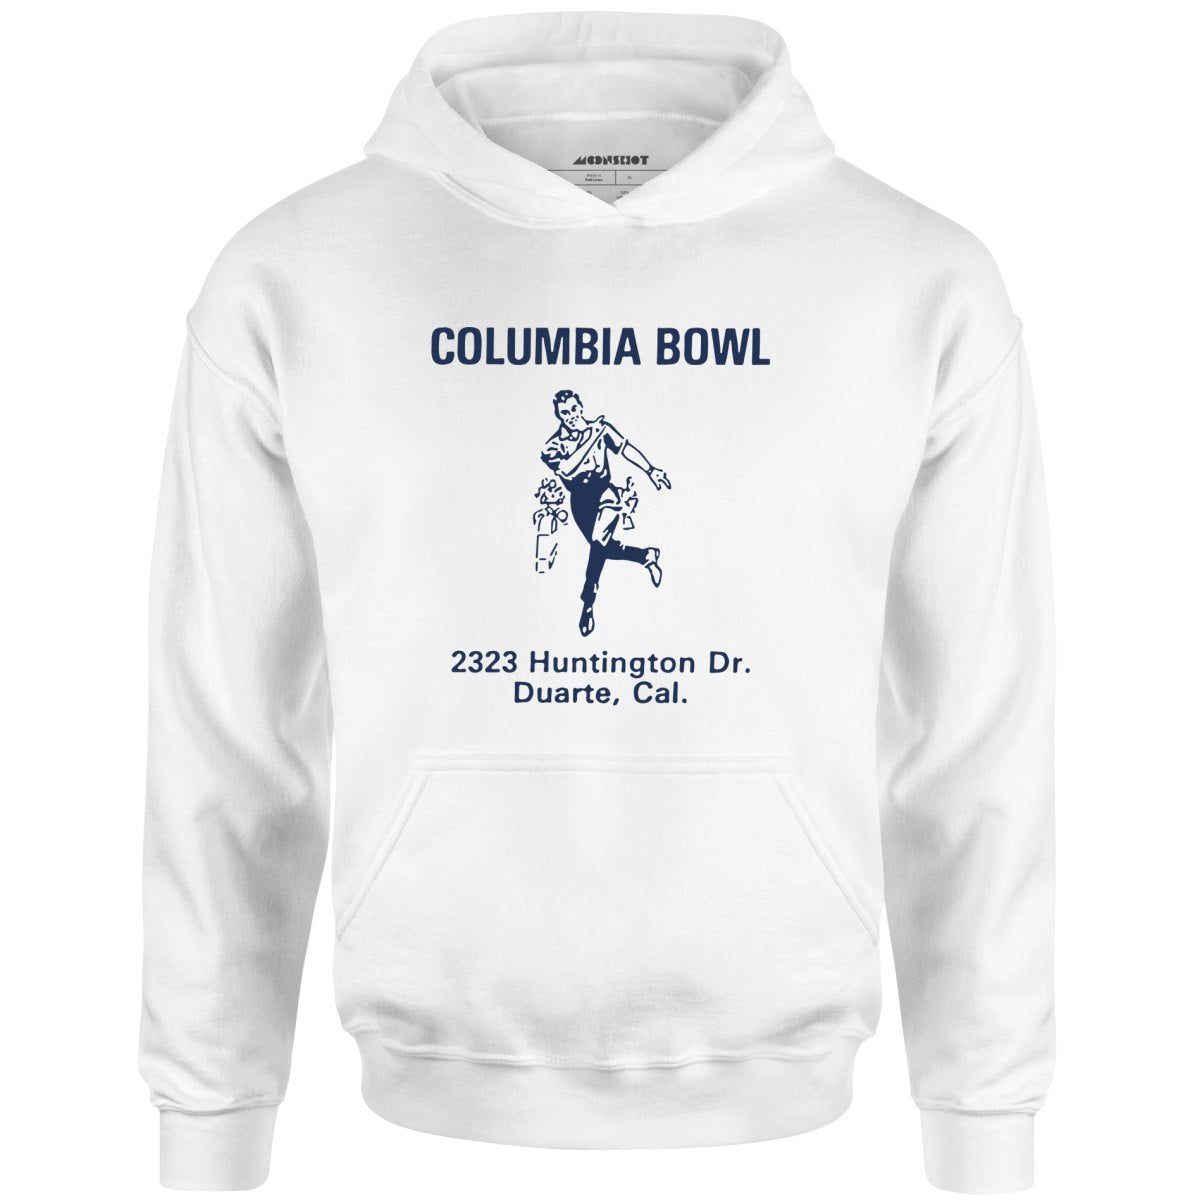 Columbia Bowl - Duarte, CA - Vintage Bowling Alley - Unisex Hoodie